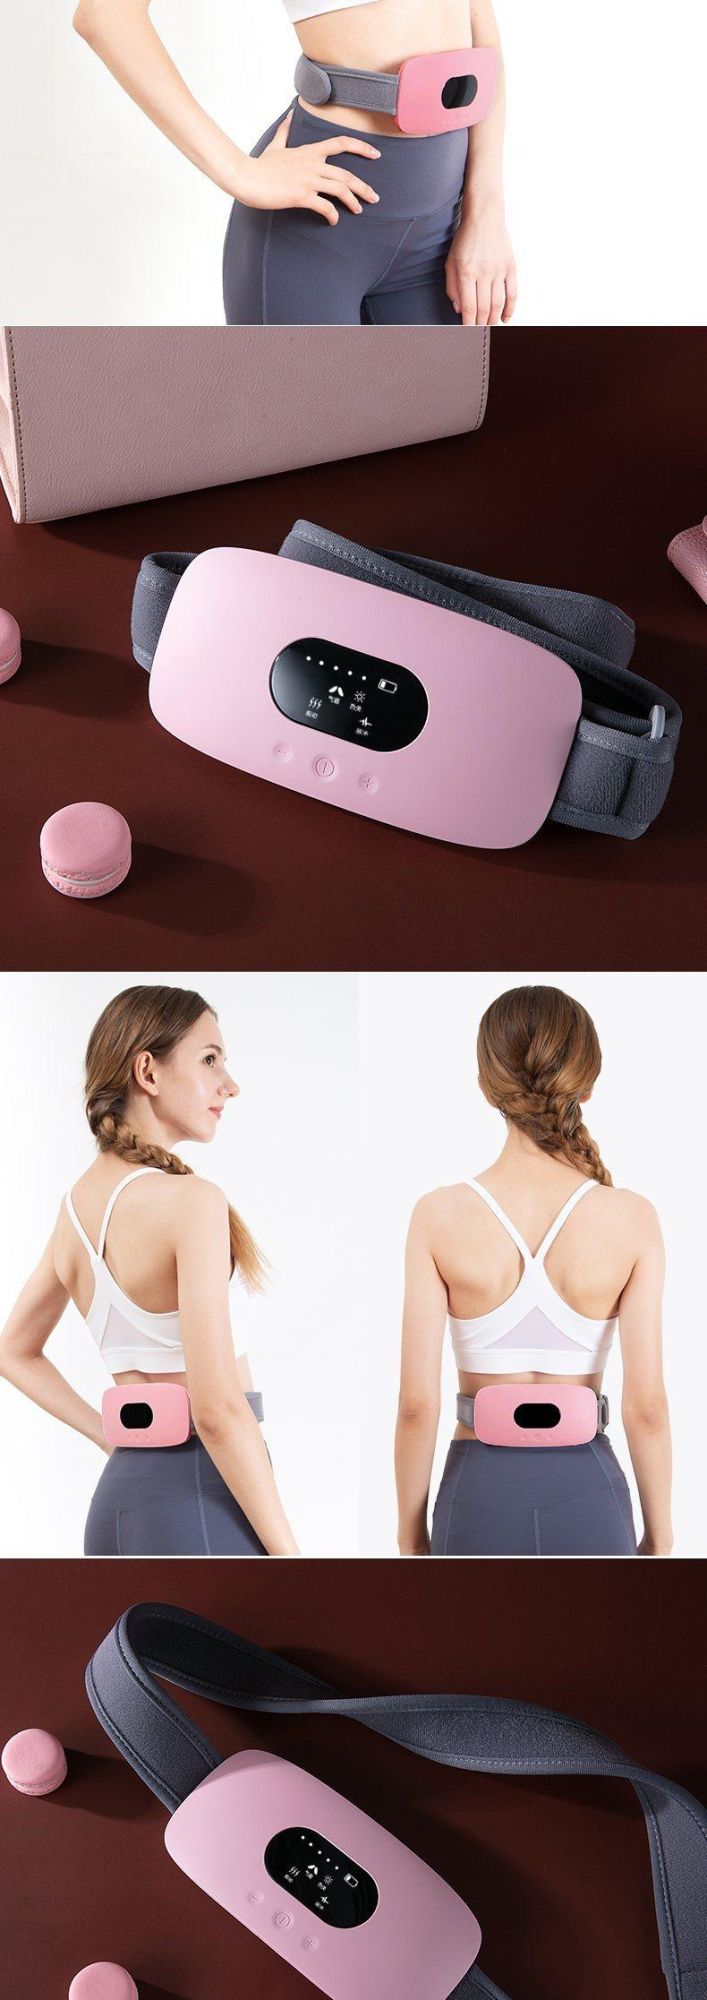 Hezheng Belly Vibrator Slimming Belt Body Care Shape Slimming Massage Vibrating Belt